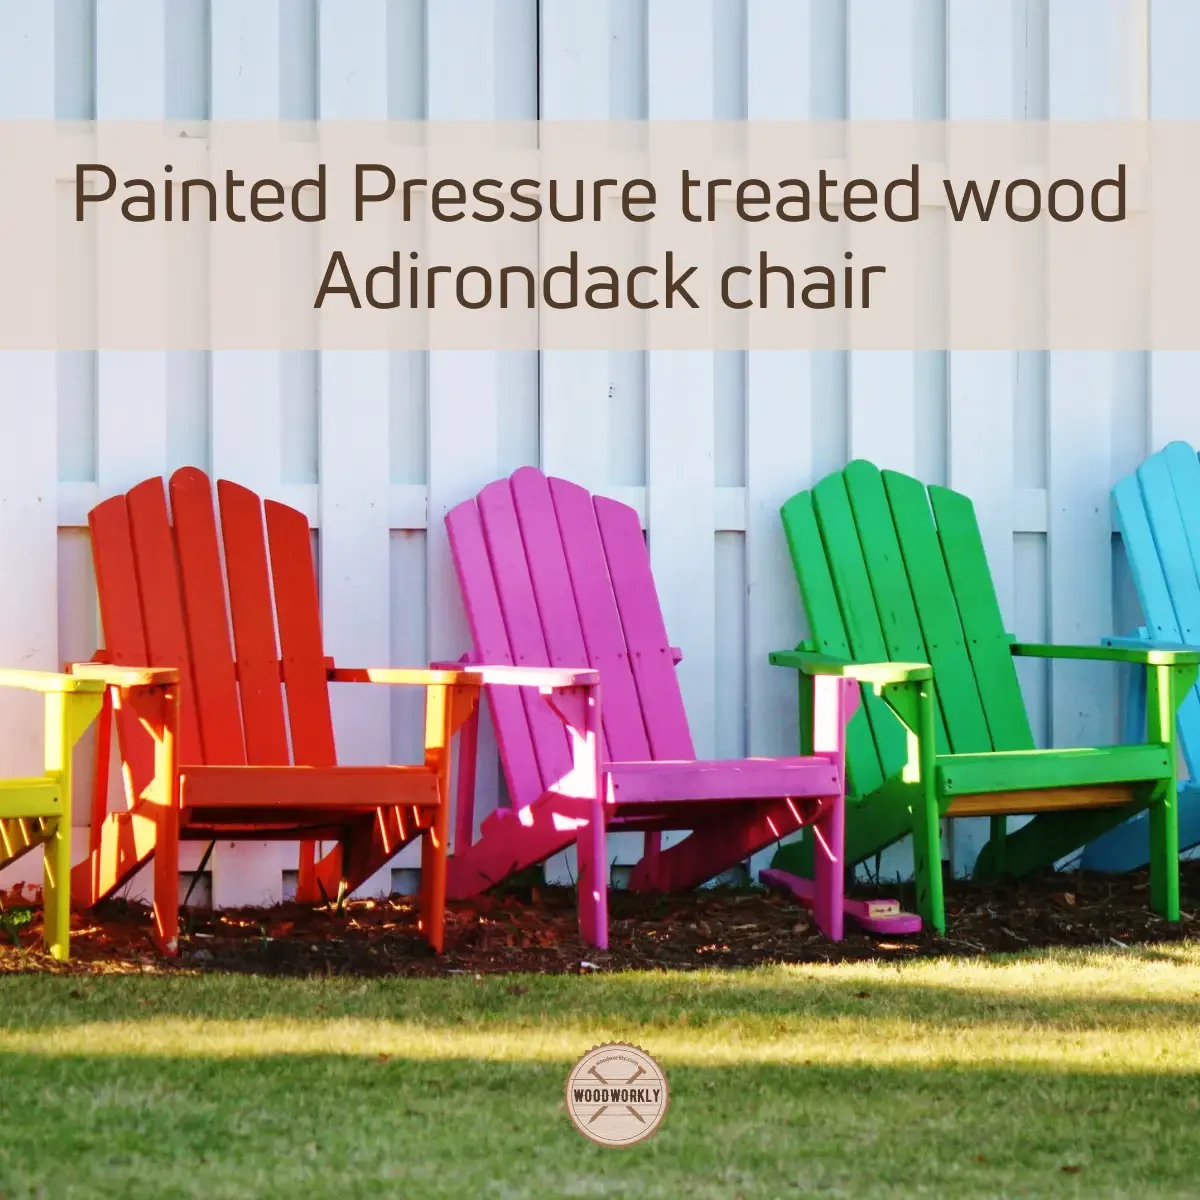 Painted Pressure treated wood Adirondack chair